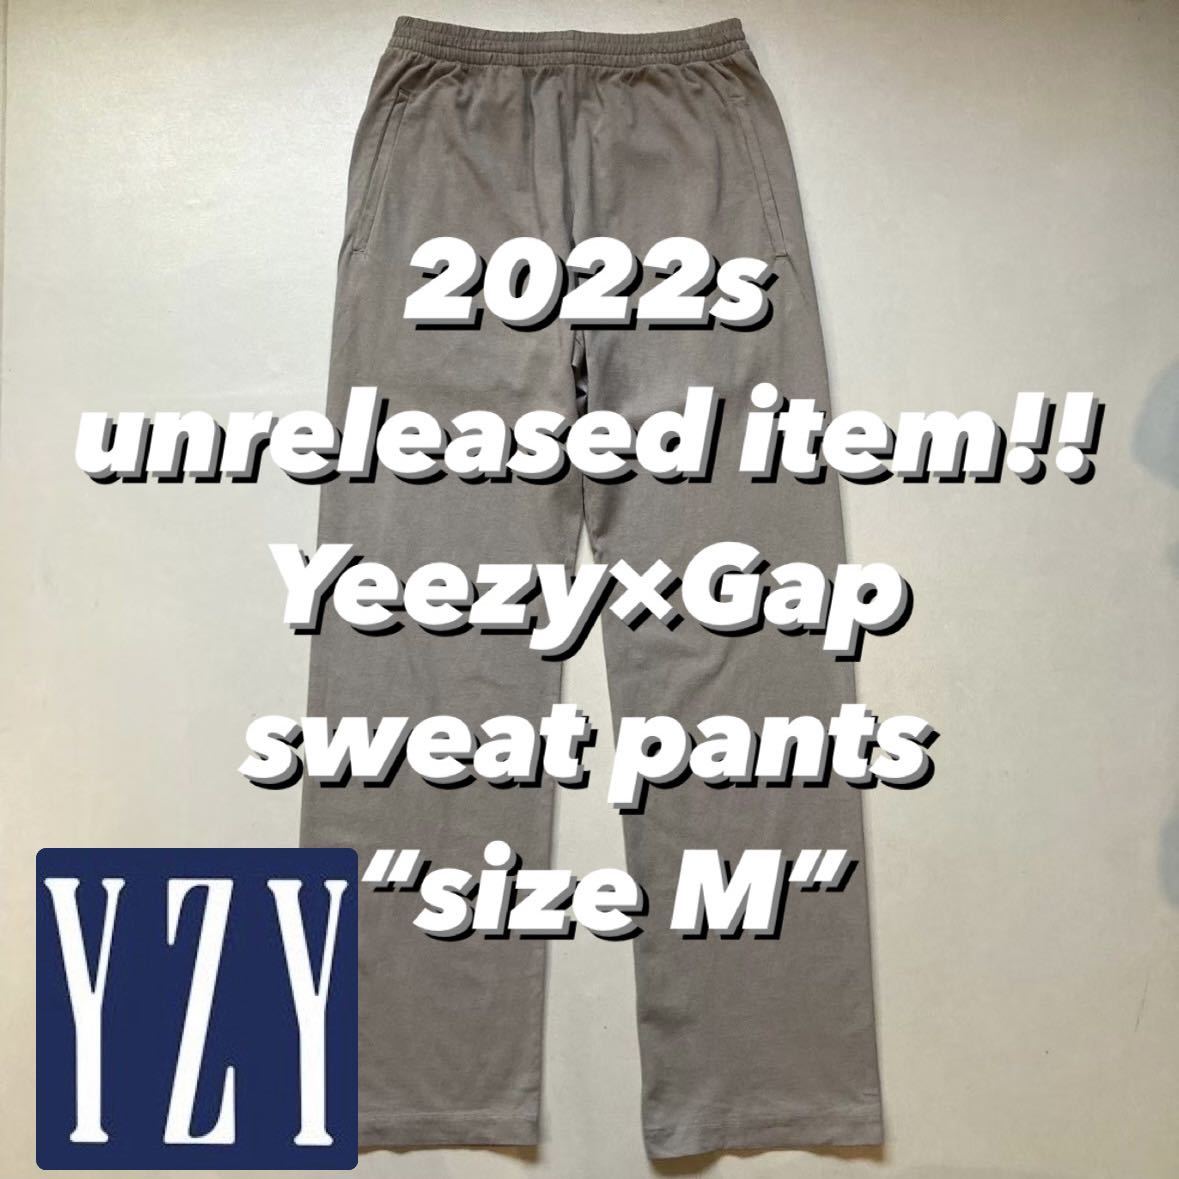 2022s unreleased item!! Yeezy×Gap sweat pants “size M” 2022年 アンリリースドアイテム イージーギャップ スウェットパンツ_画像1